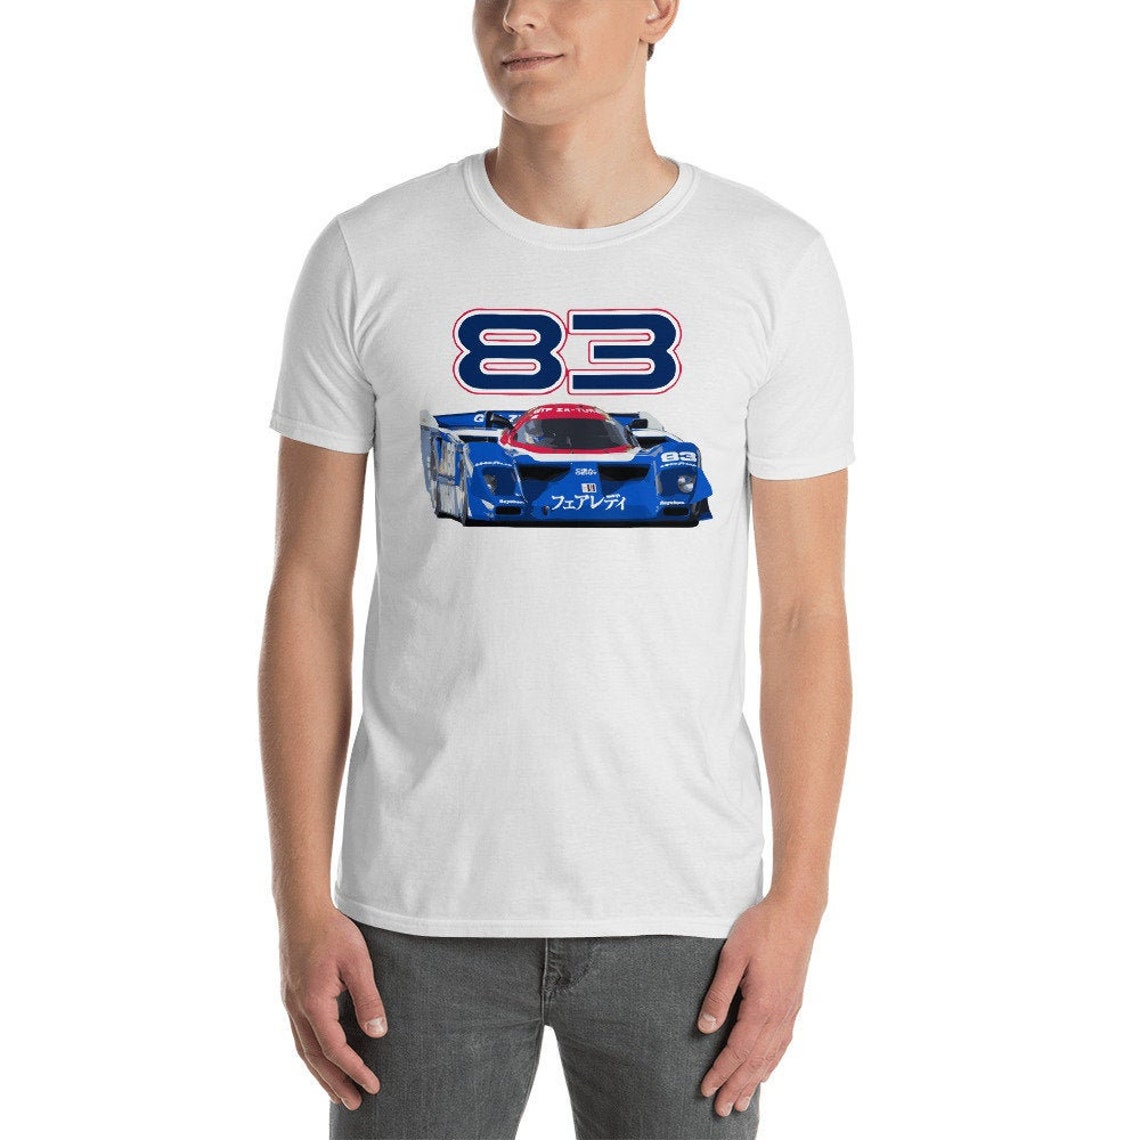 1987-1988 Nissan GTP Zx-turbo Race Car T-shirt - Etsy